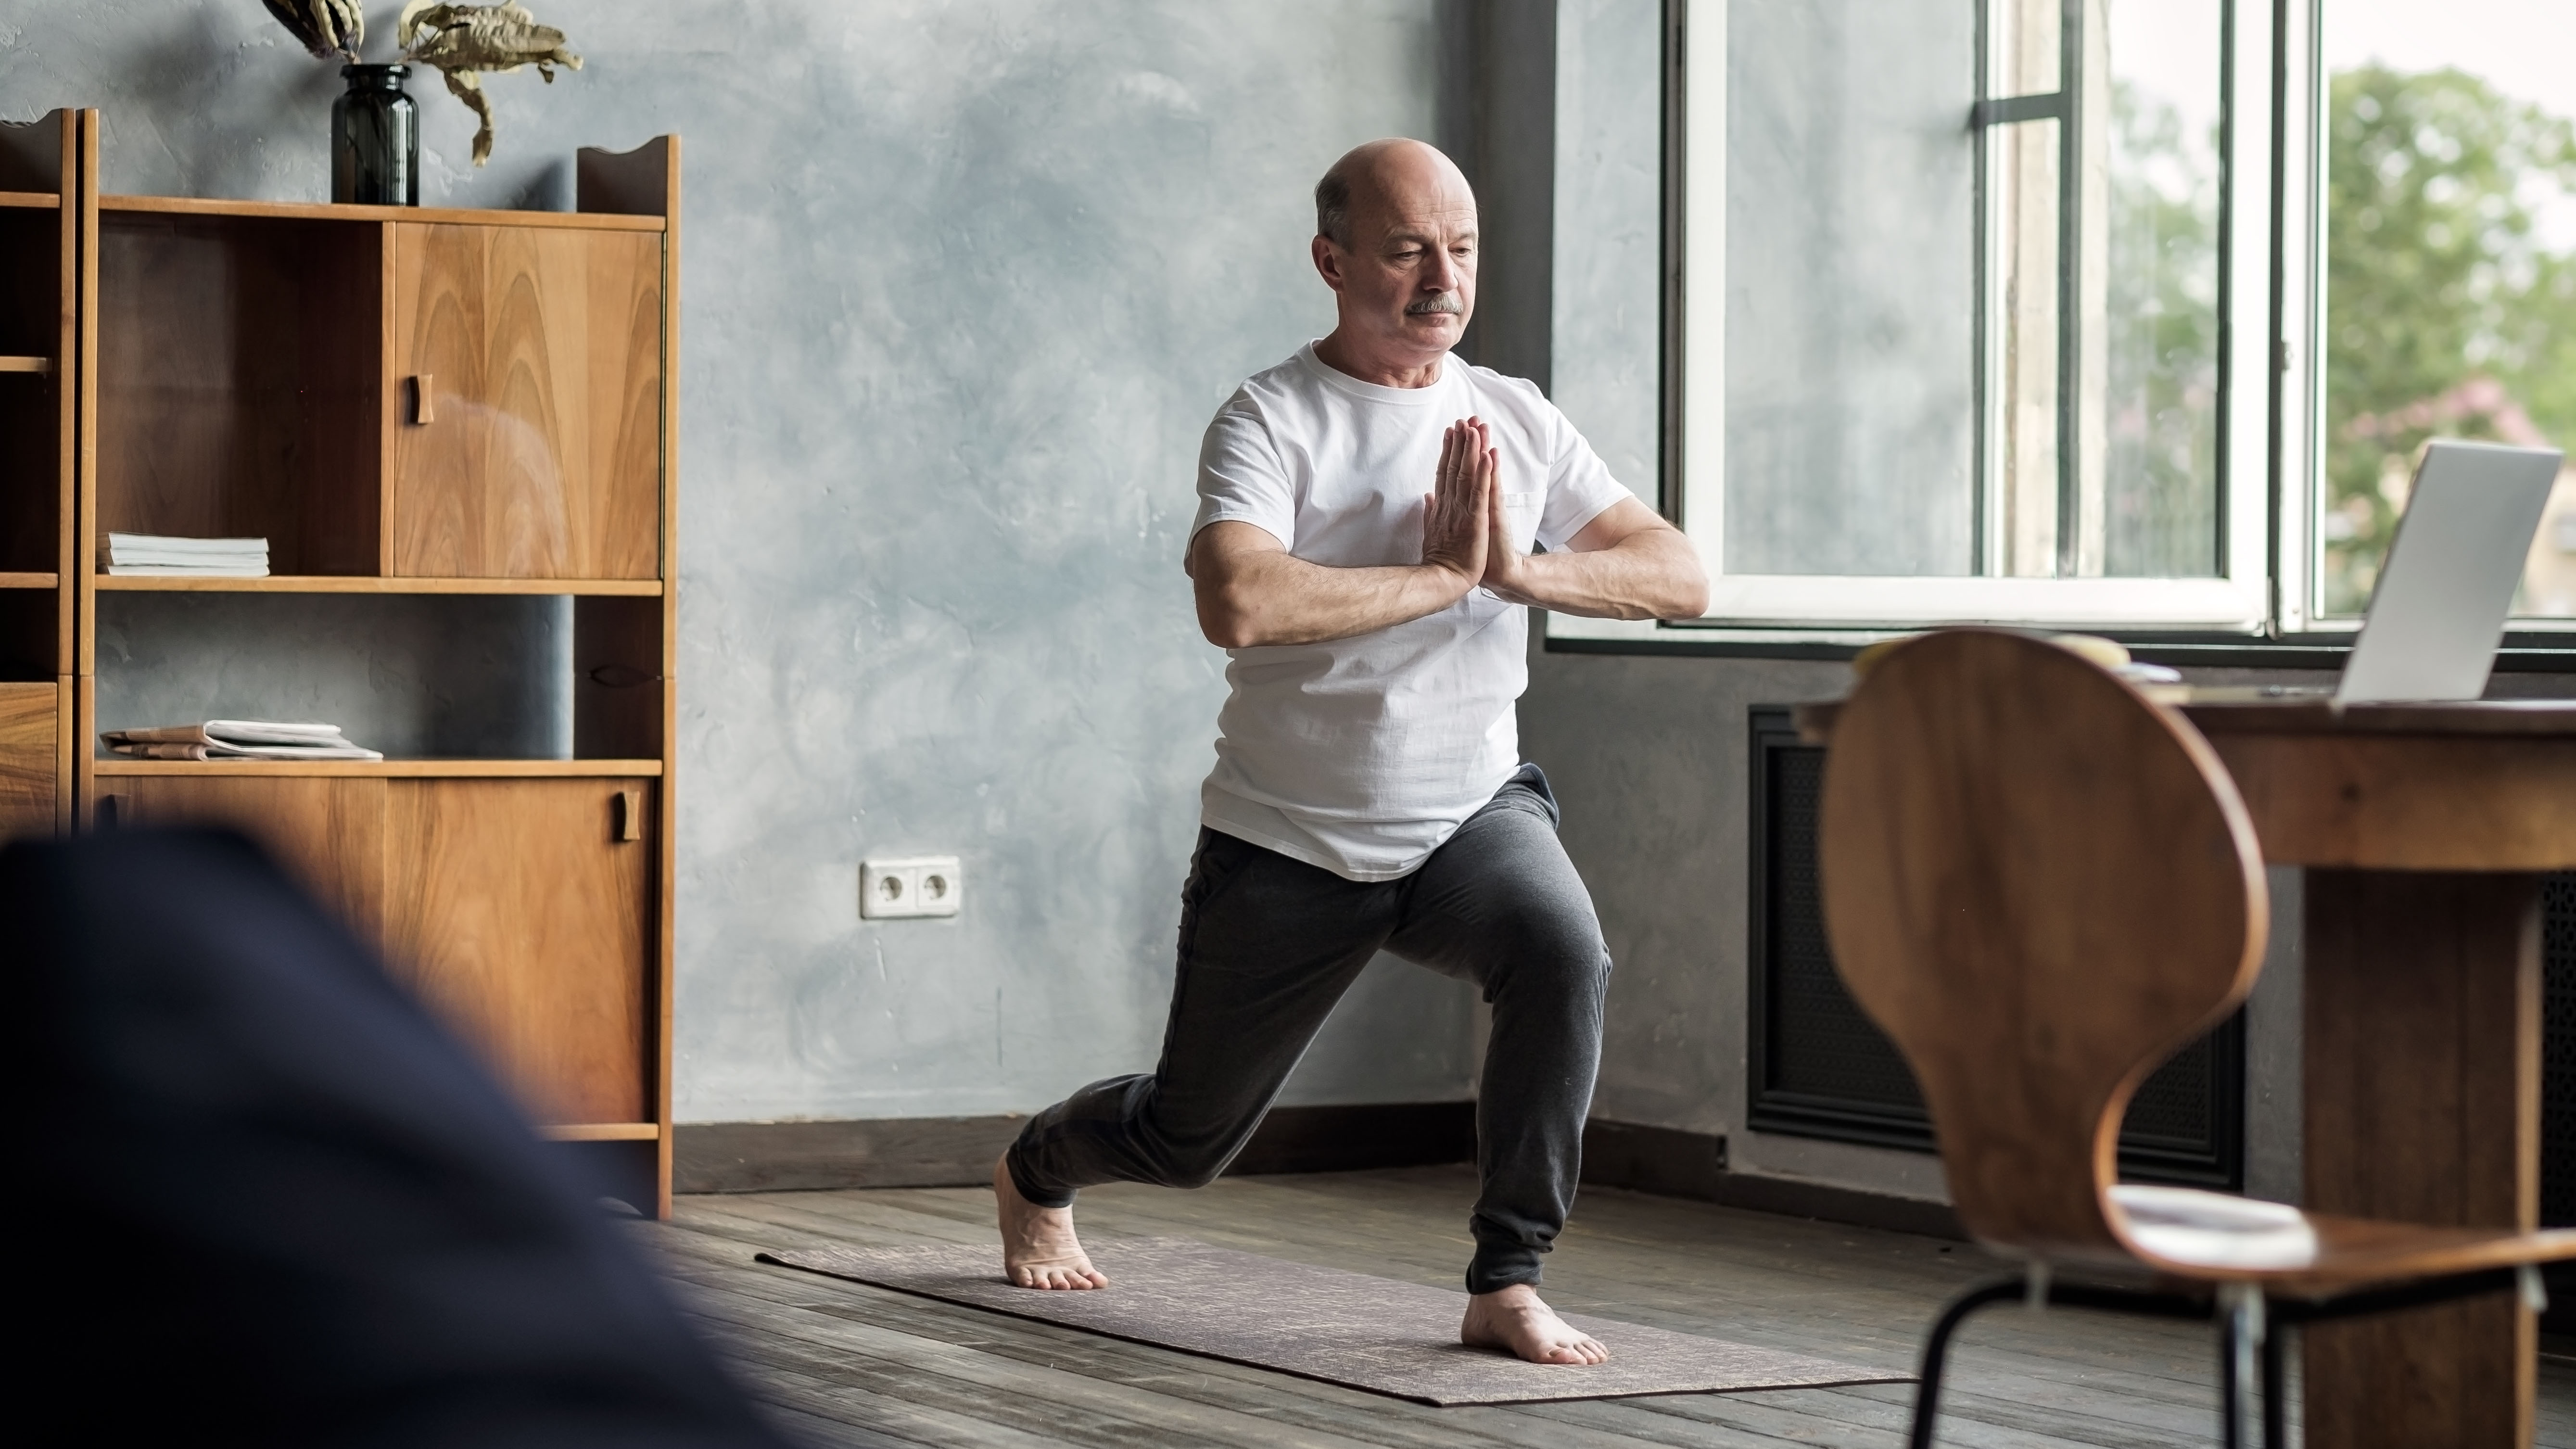 Man practicing yoga at home